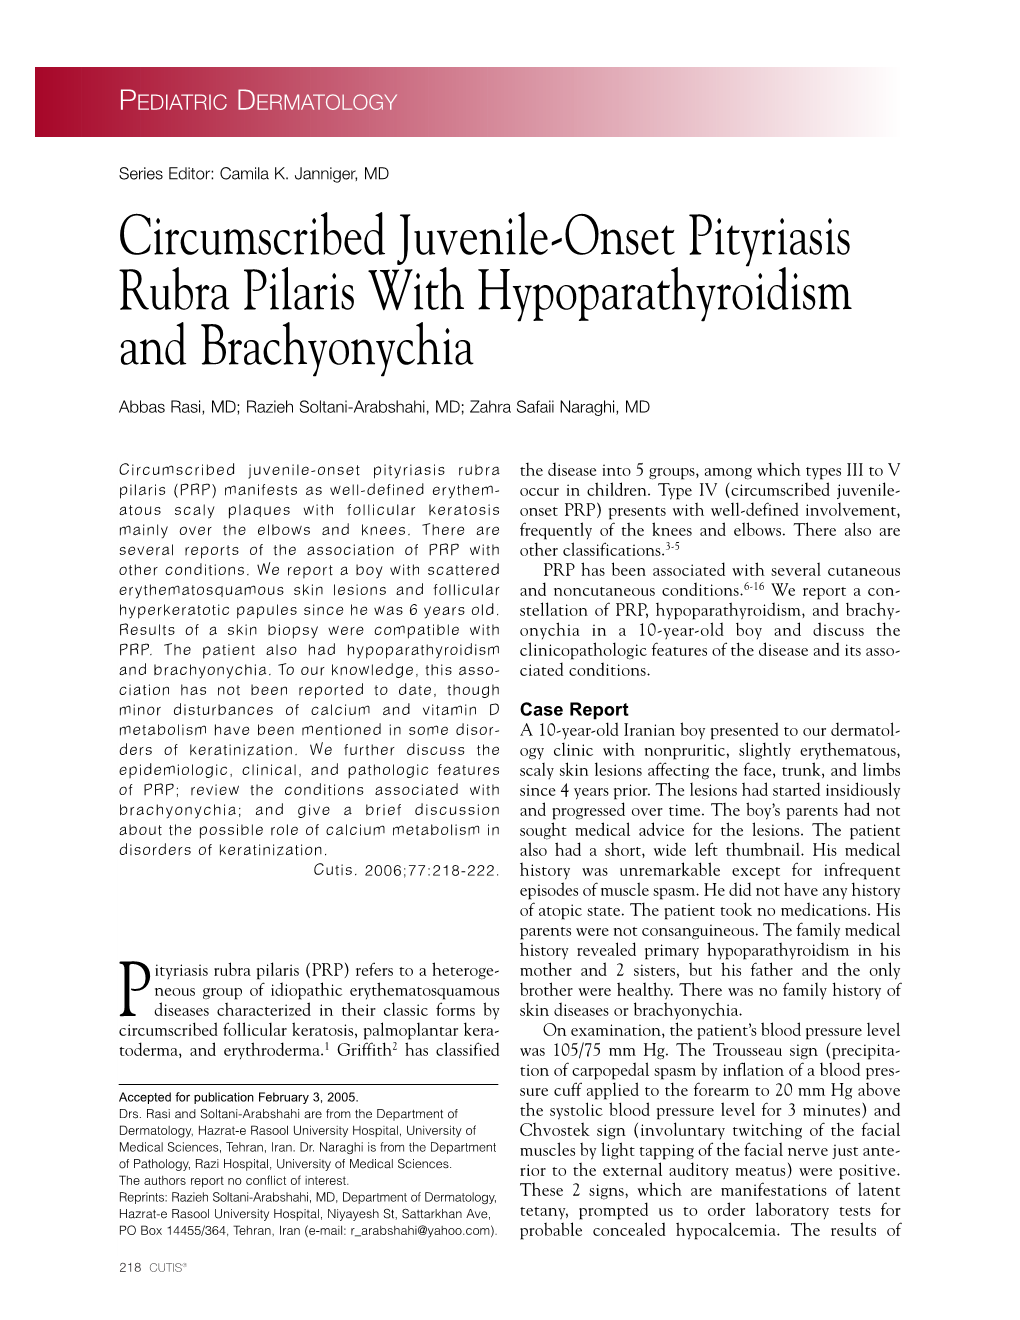 Circumscribed Juvenile-Onset Pityriasis Rubra Pilaris with Hypoparathyroidism and Brachyonychia